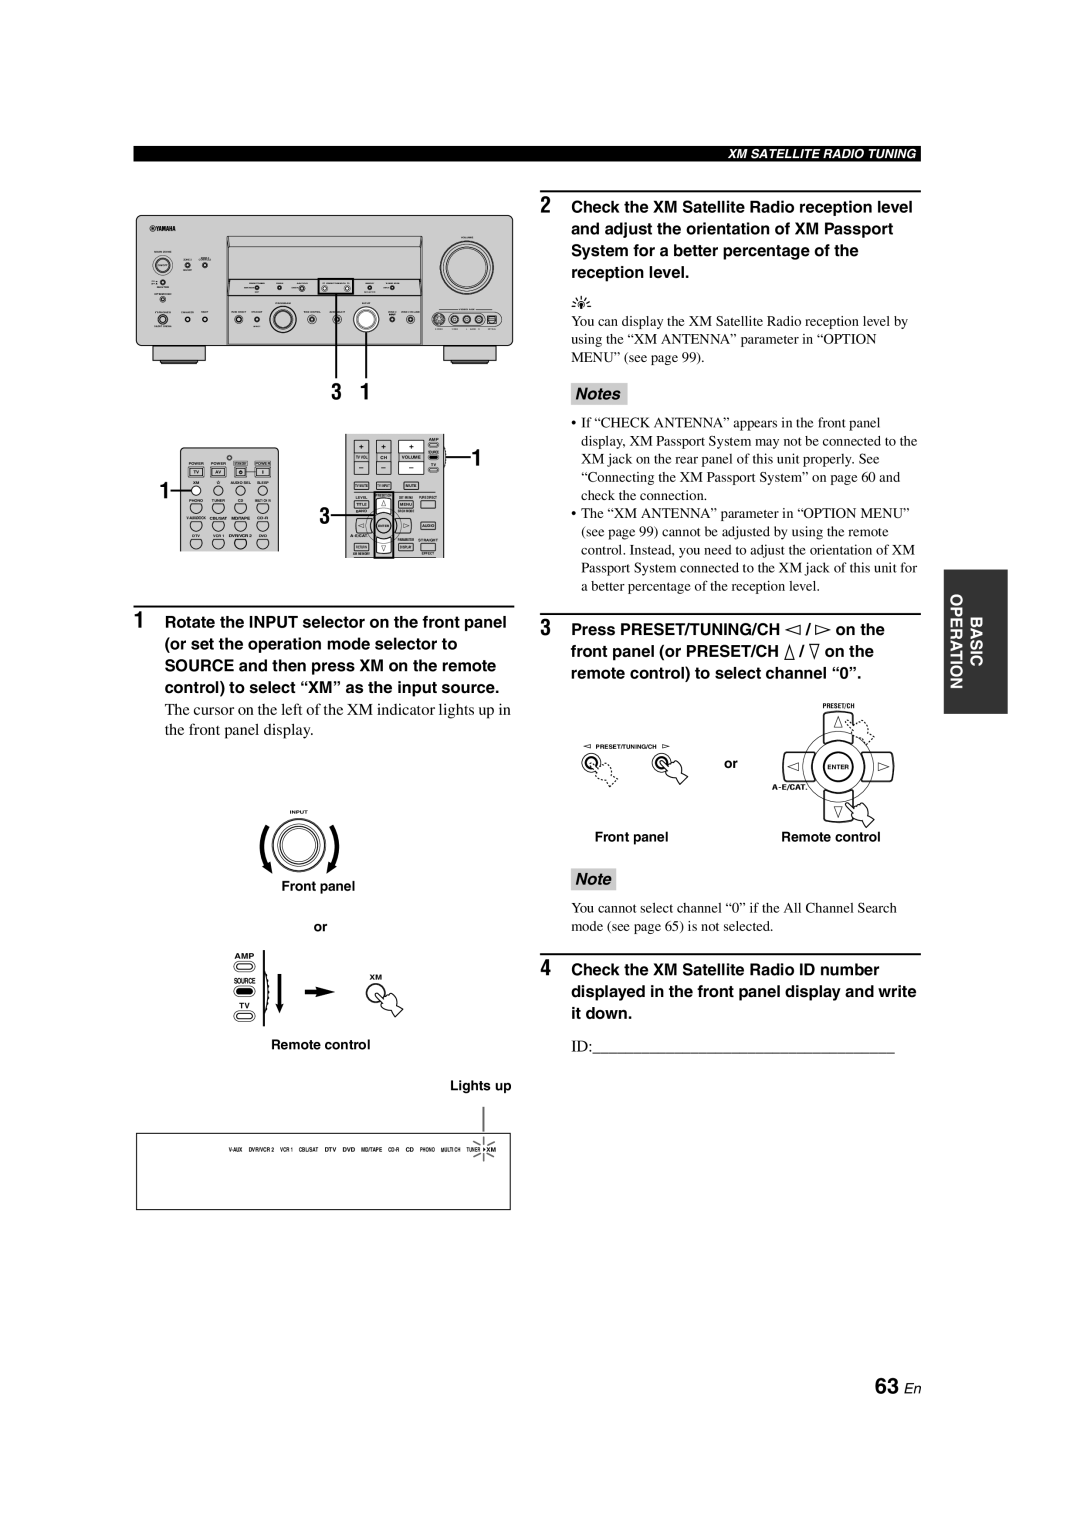 Yamaha HTR-6090 owner manual 63 En, Notes, Id 